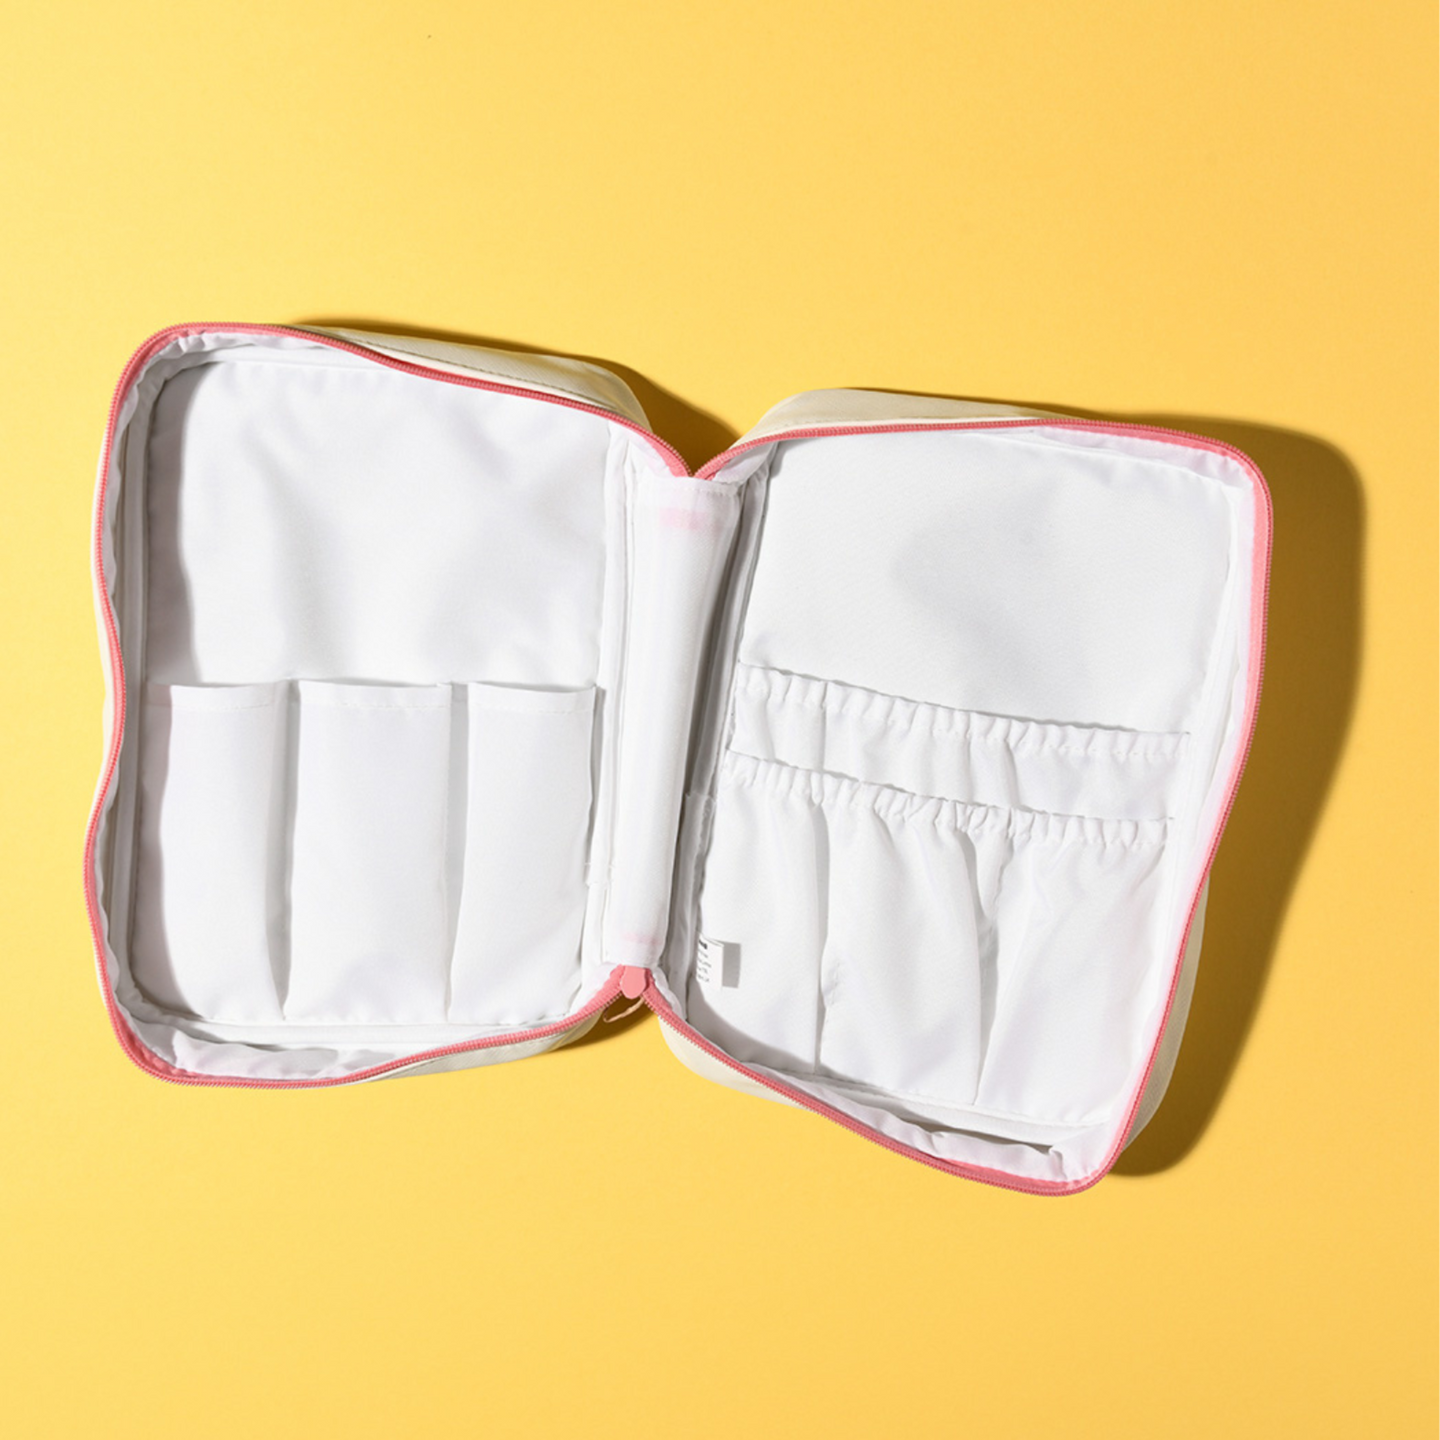 NEW White & Pink Pick 'N' Mix Travel Bag